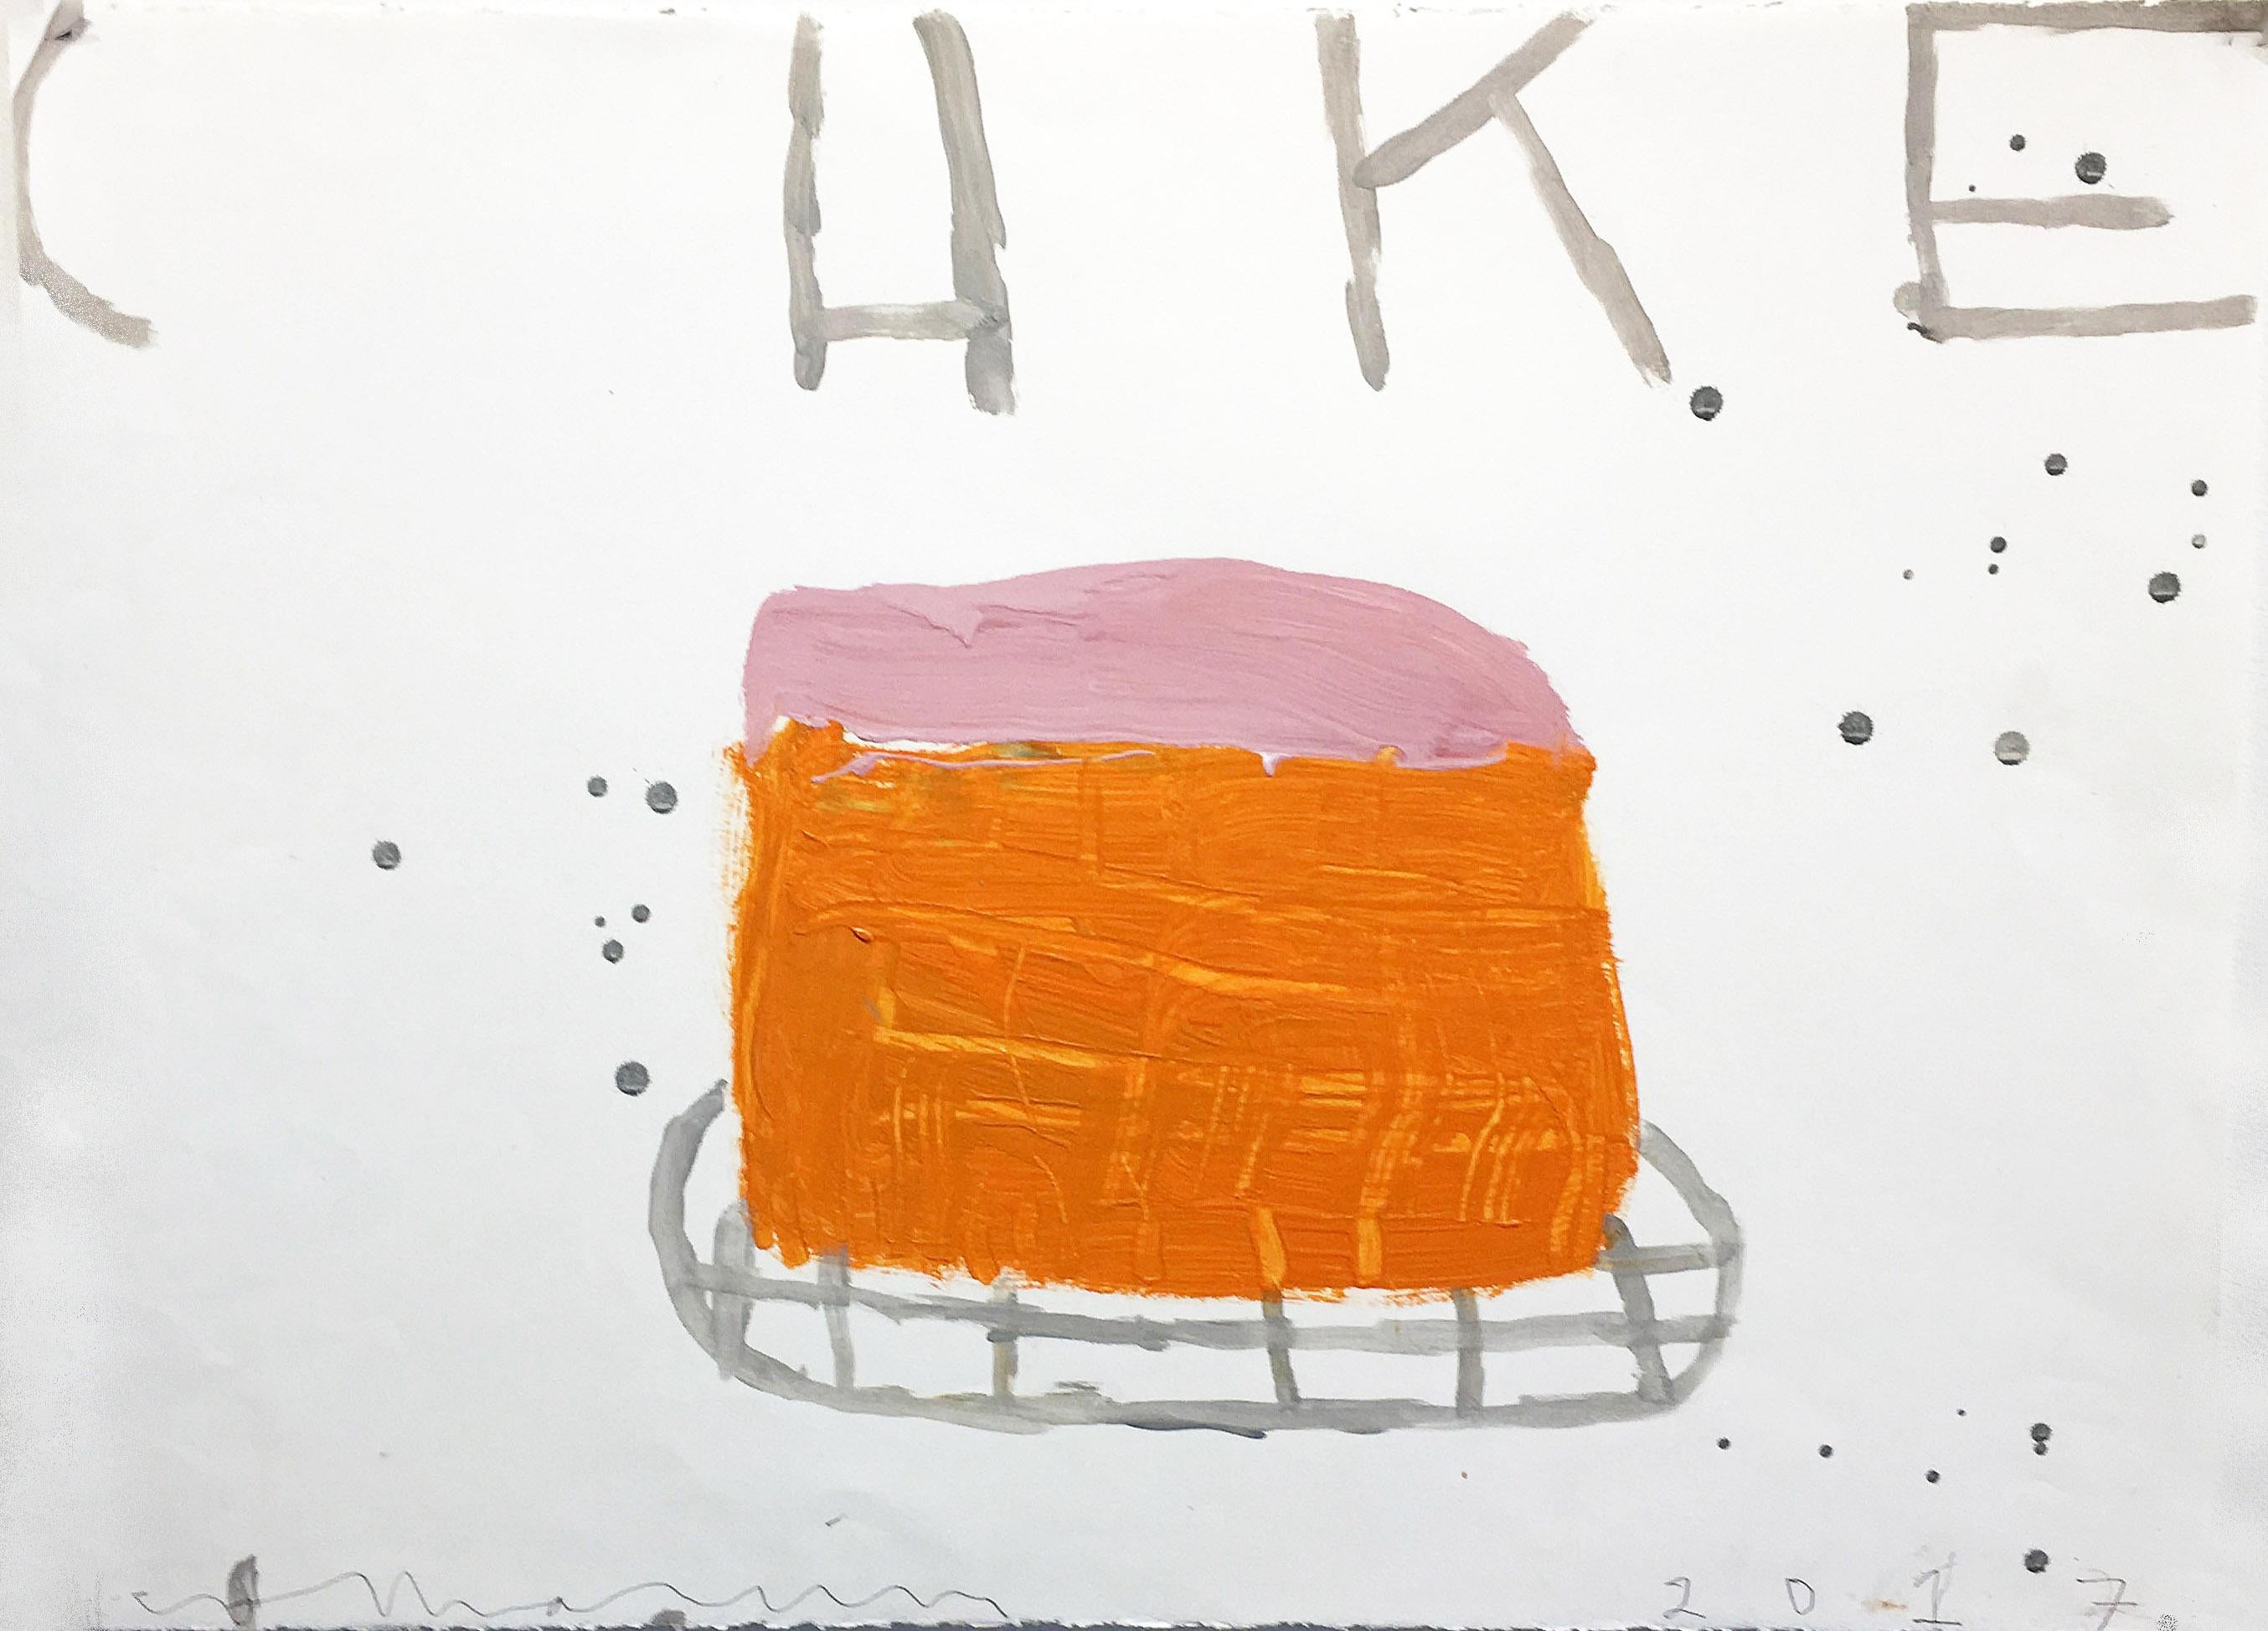 Cake (Orange and Chocolate on Creme) - Mixed Media Art by Gary Komarin